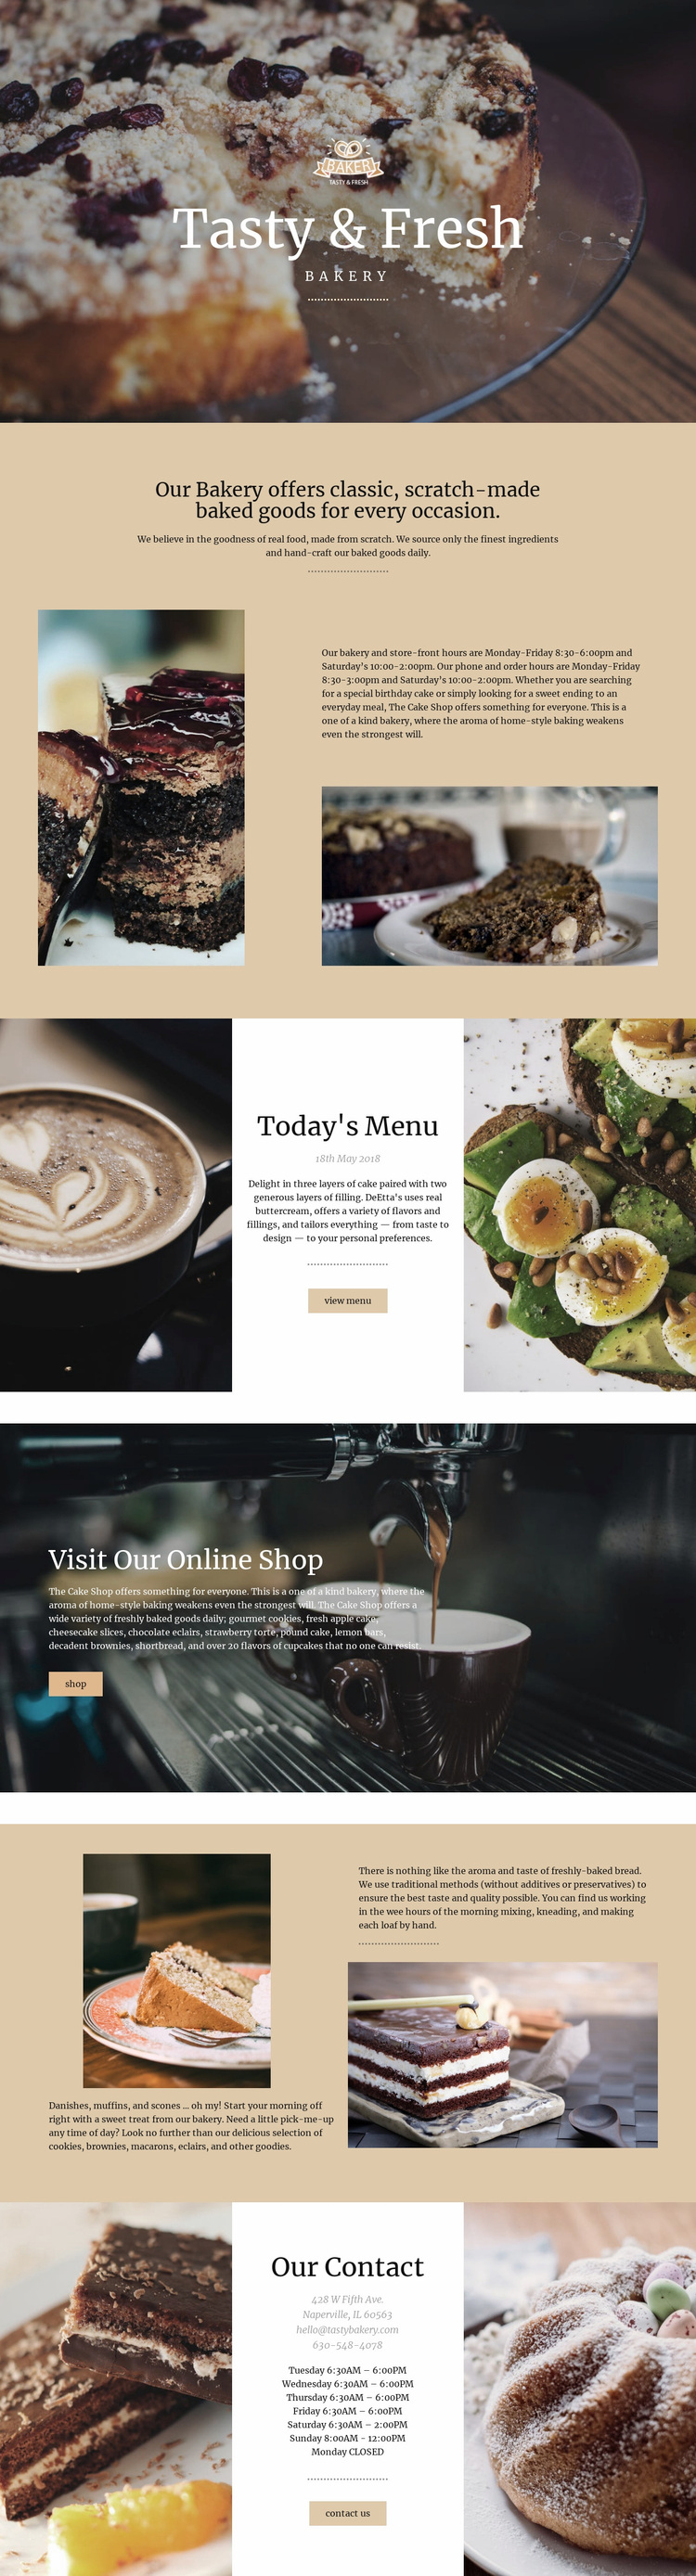 Tasty and fresh food Website Design